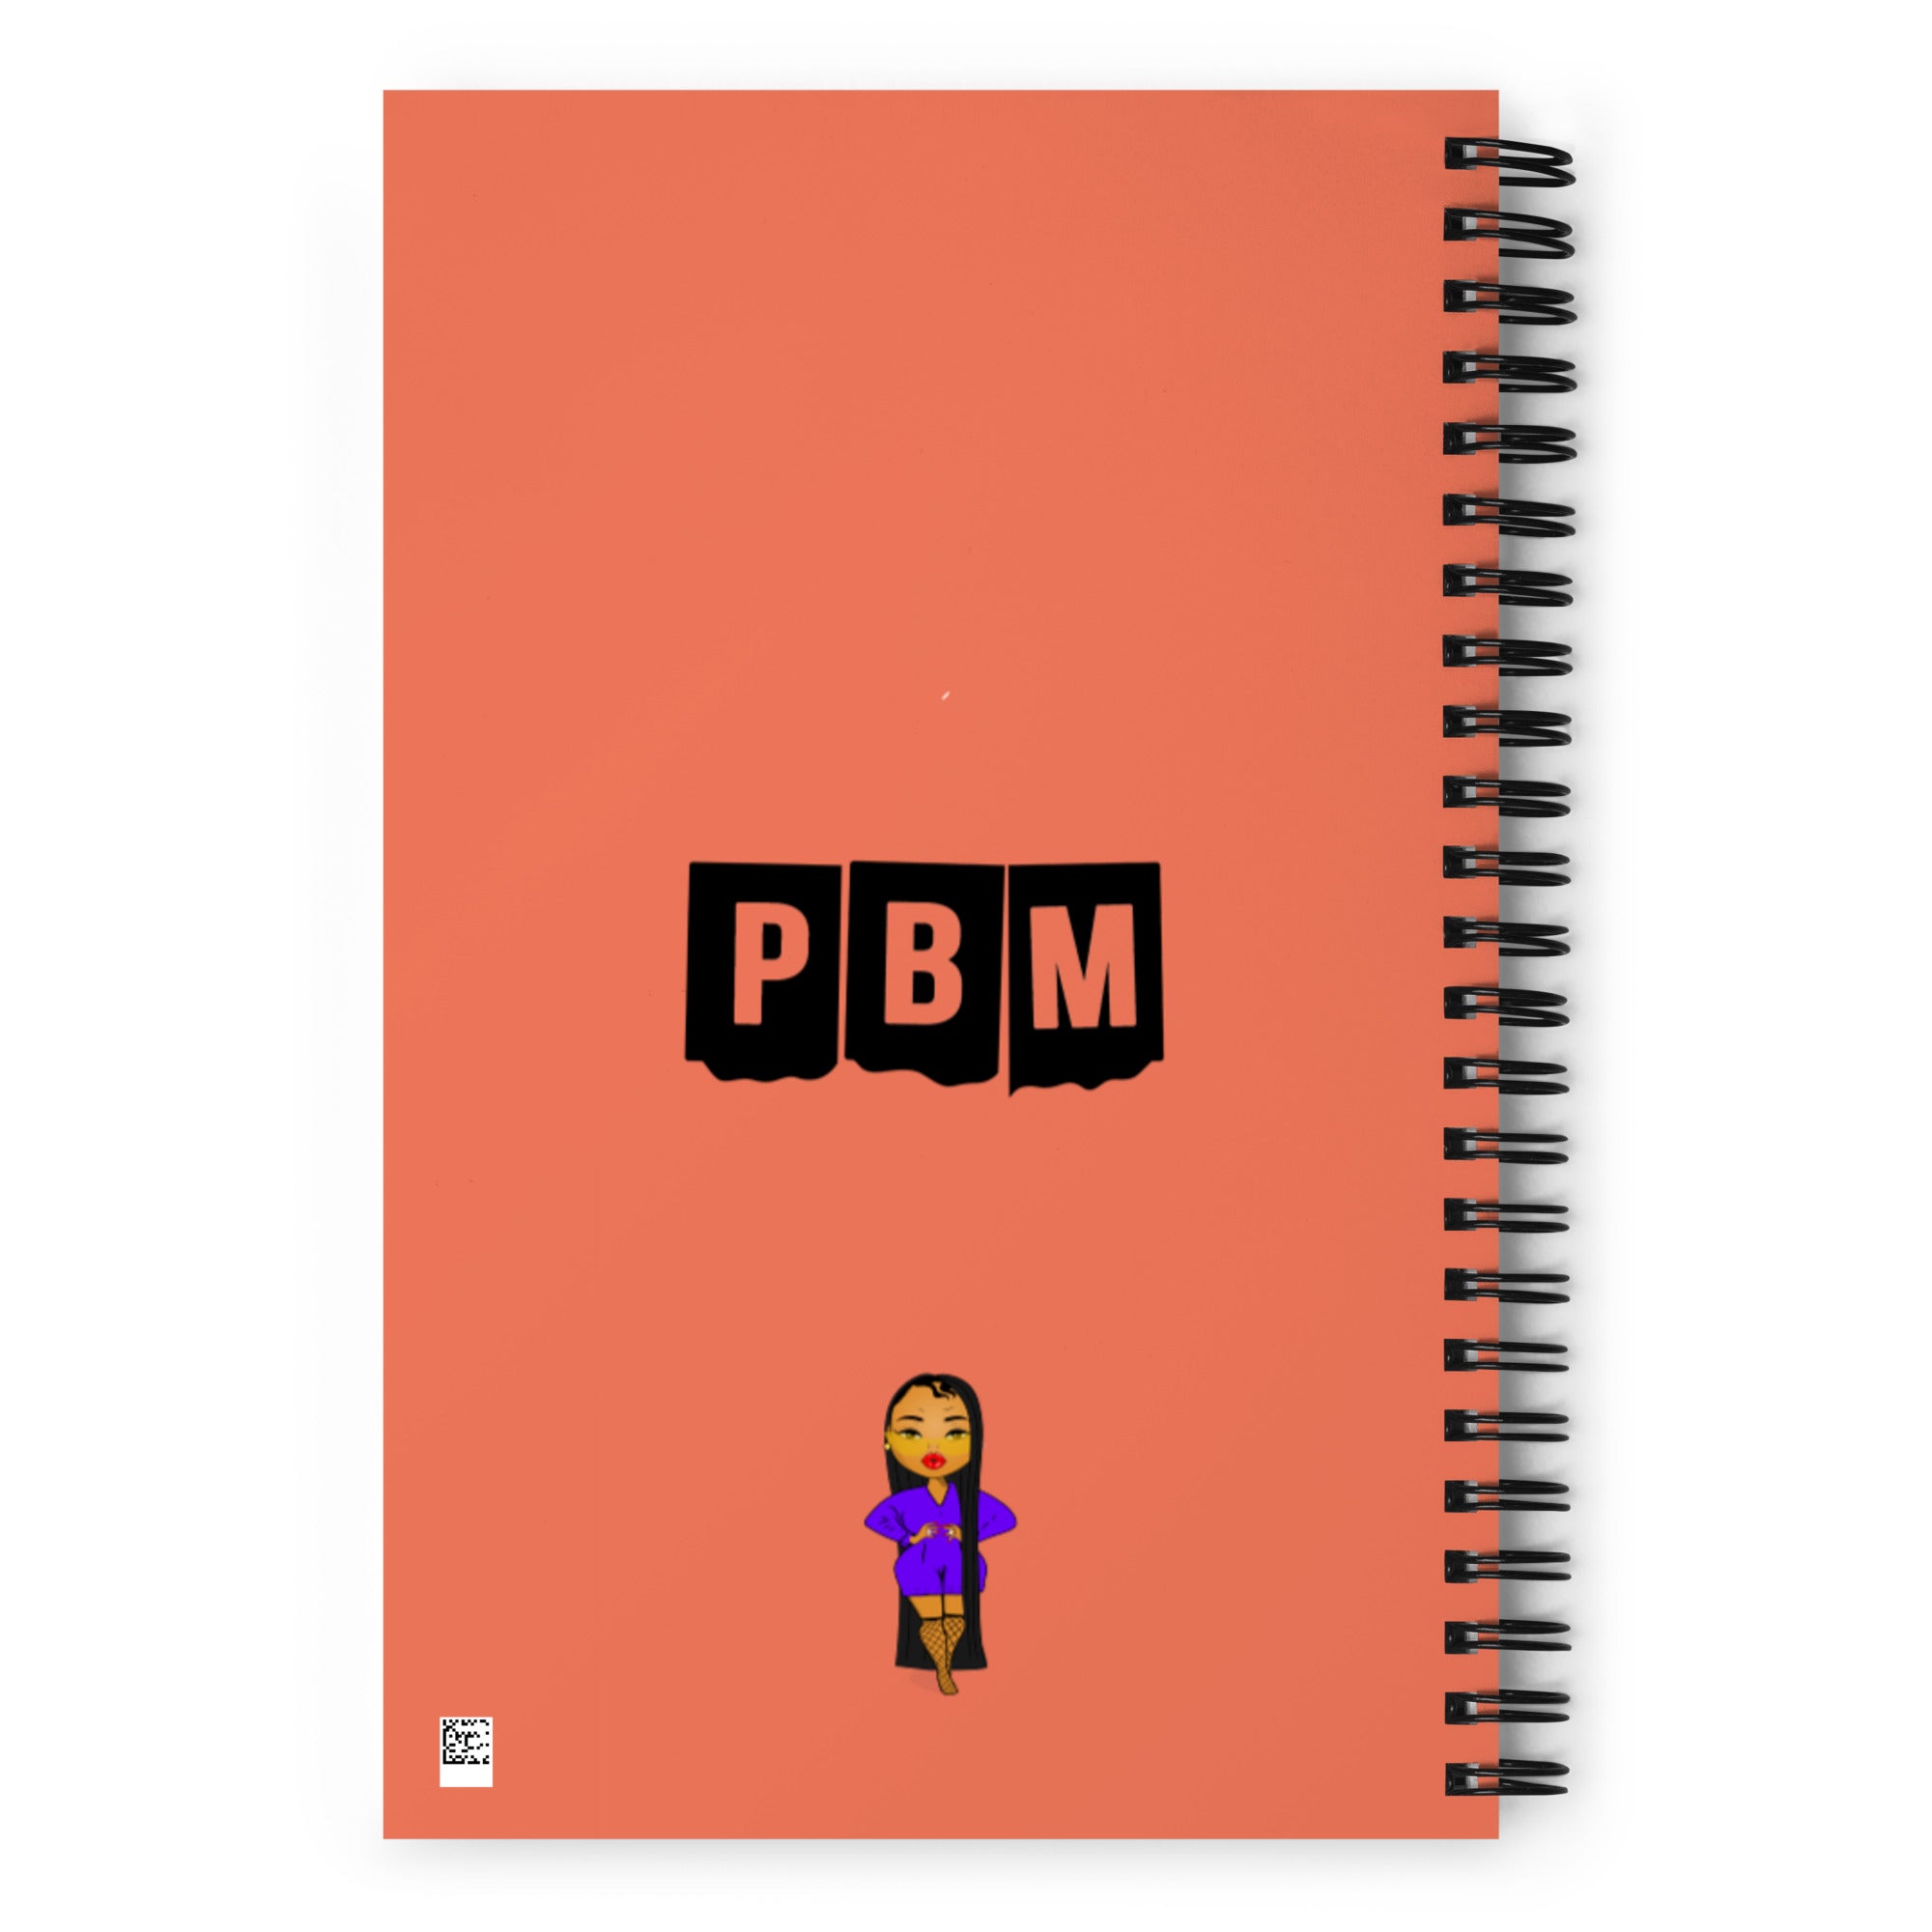 Pray, Manifest, Repeat Notebook PBM™